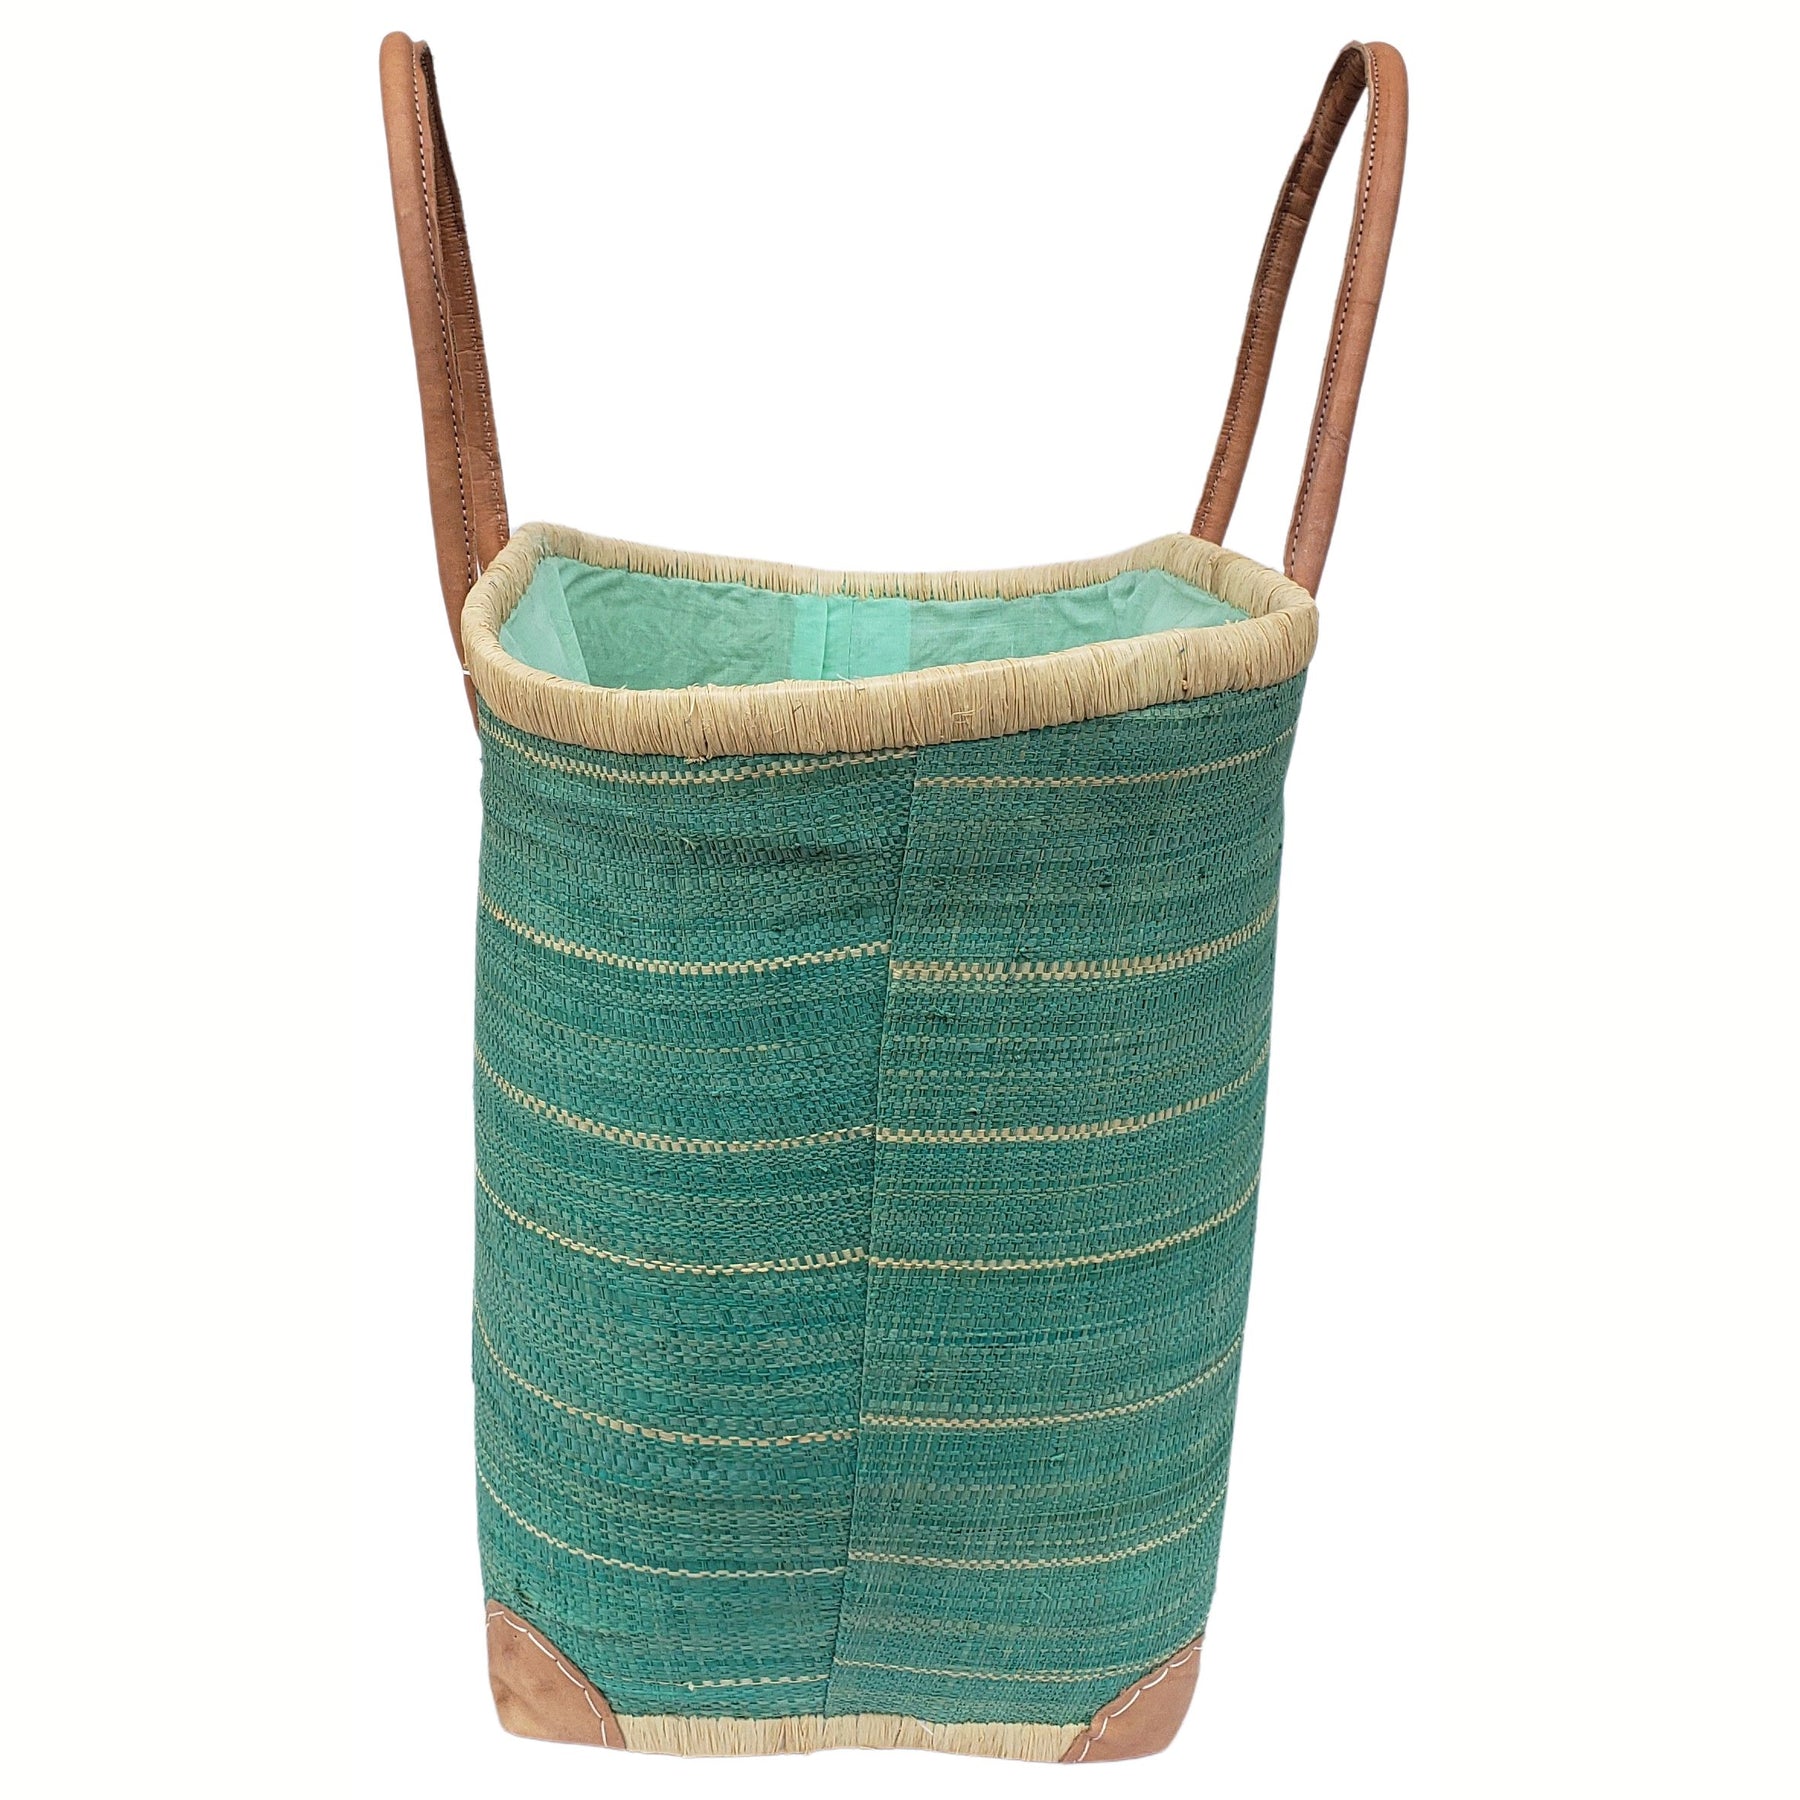 8 of 59: Adjanie: Authentic Madagascar Raffia and Leather Tote Bag (Teal)